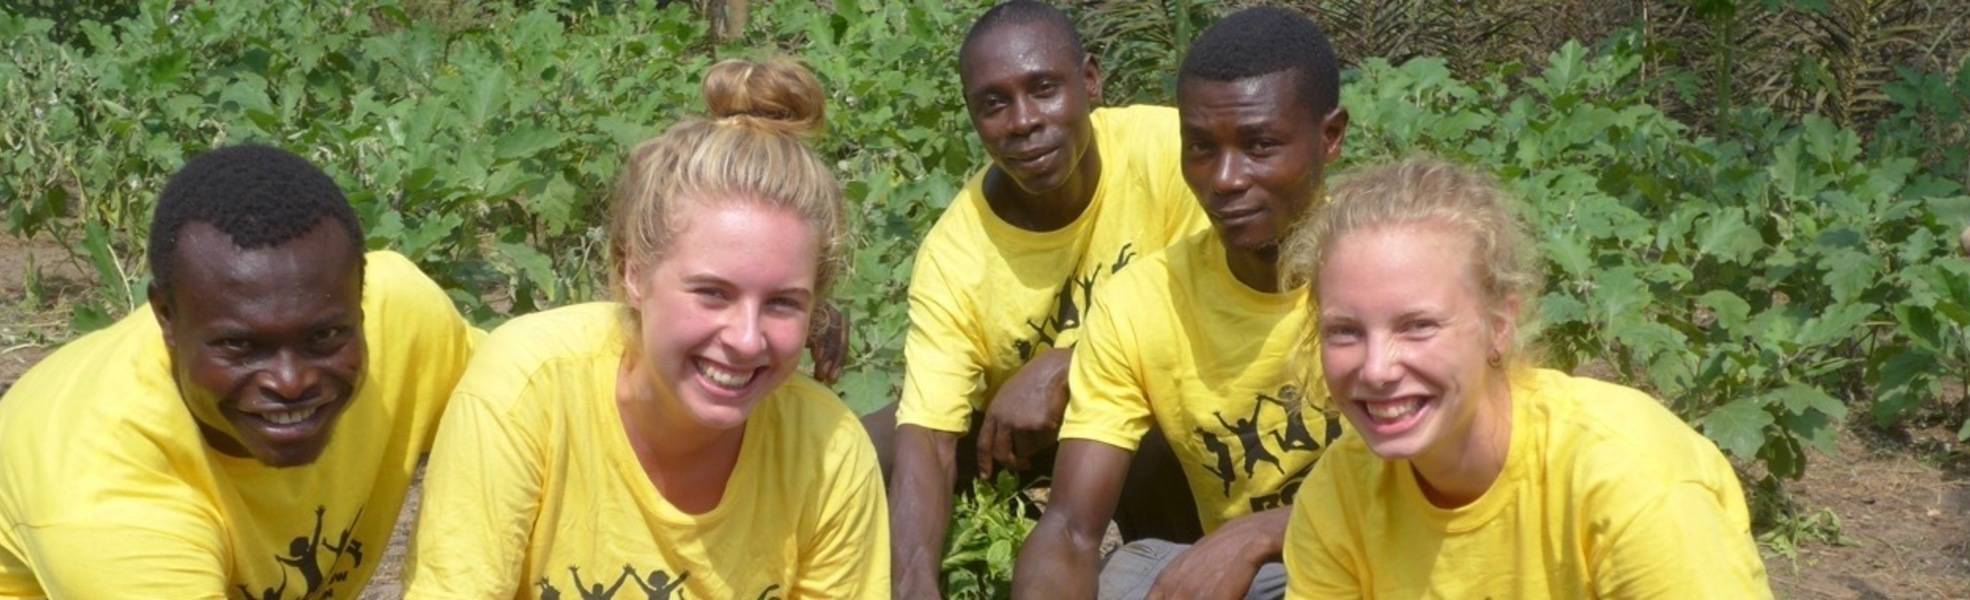 Freiwilligenarbeit im Gartenbau Projekt in Ghana